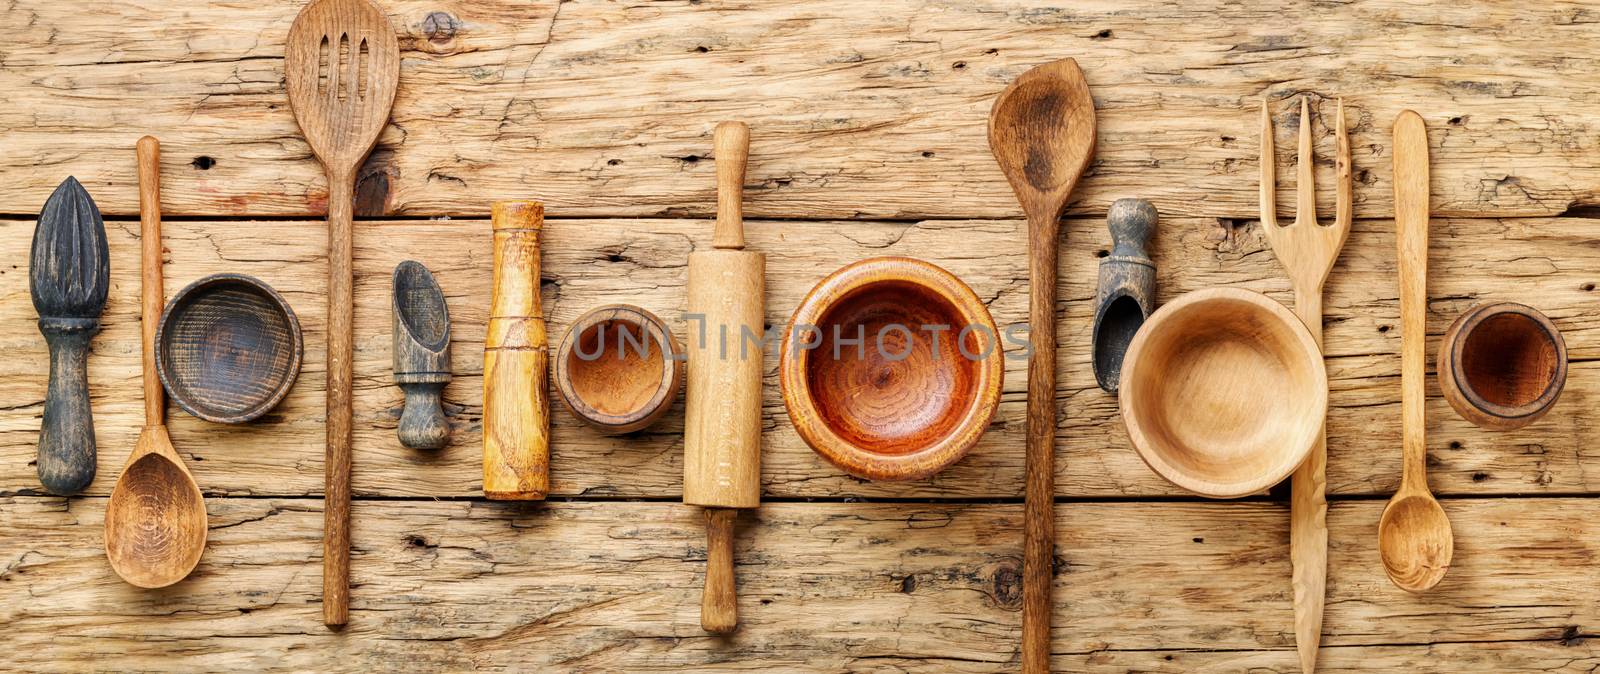 Set of wooden cooking utensils by LMykola